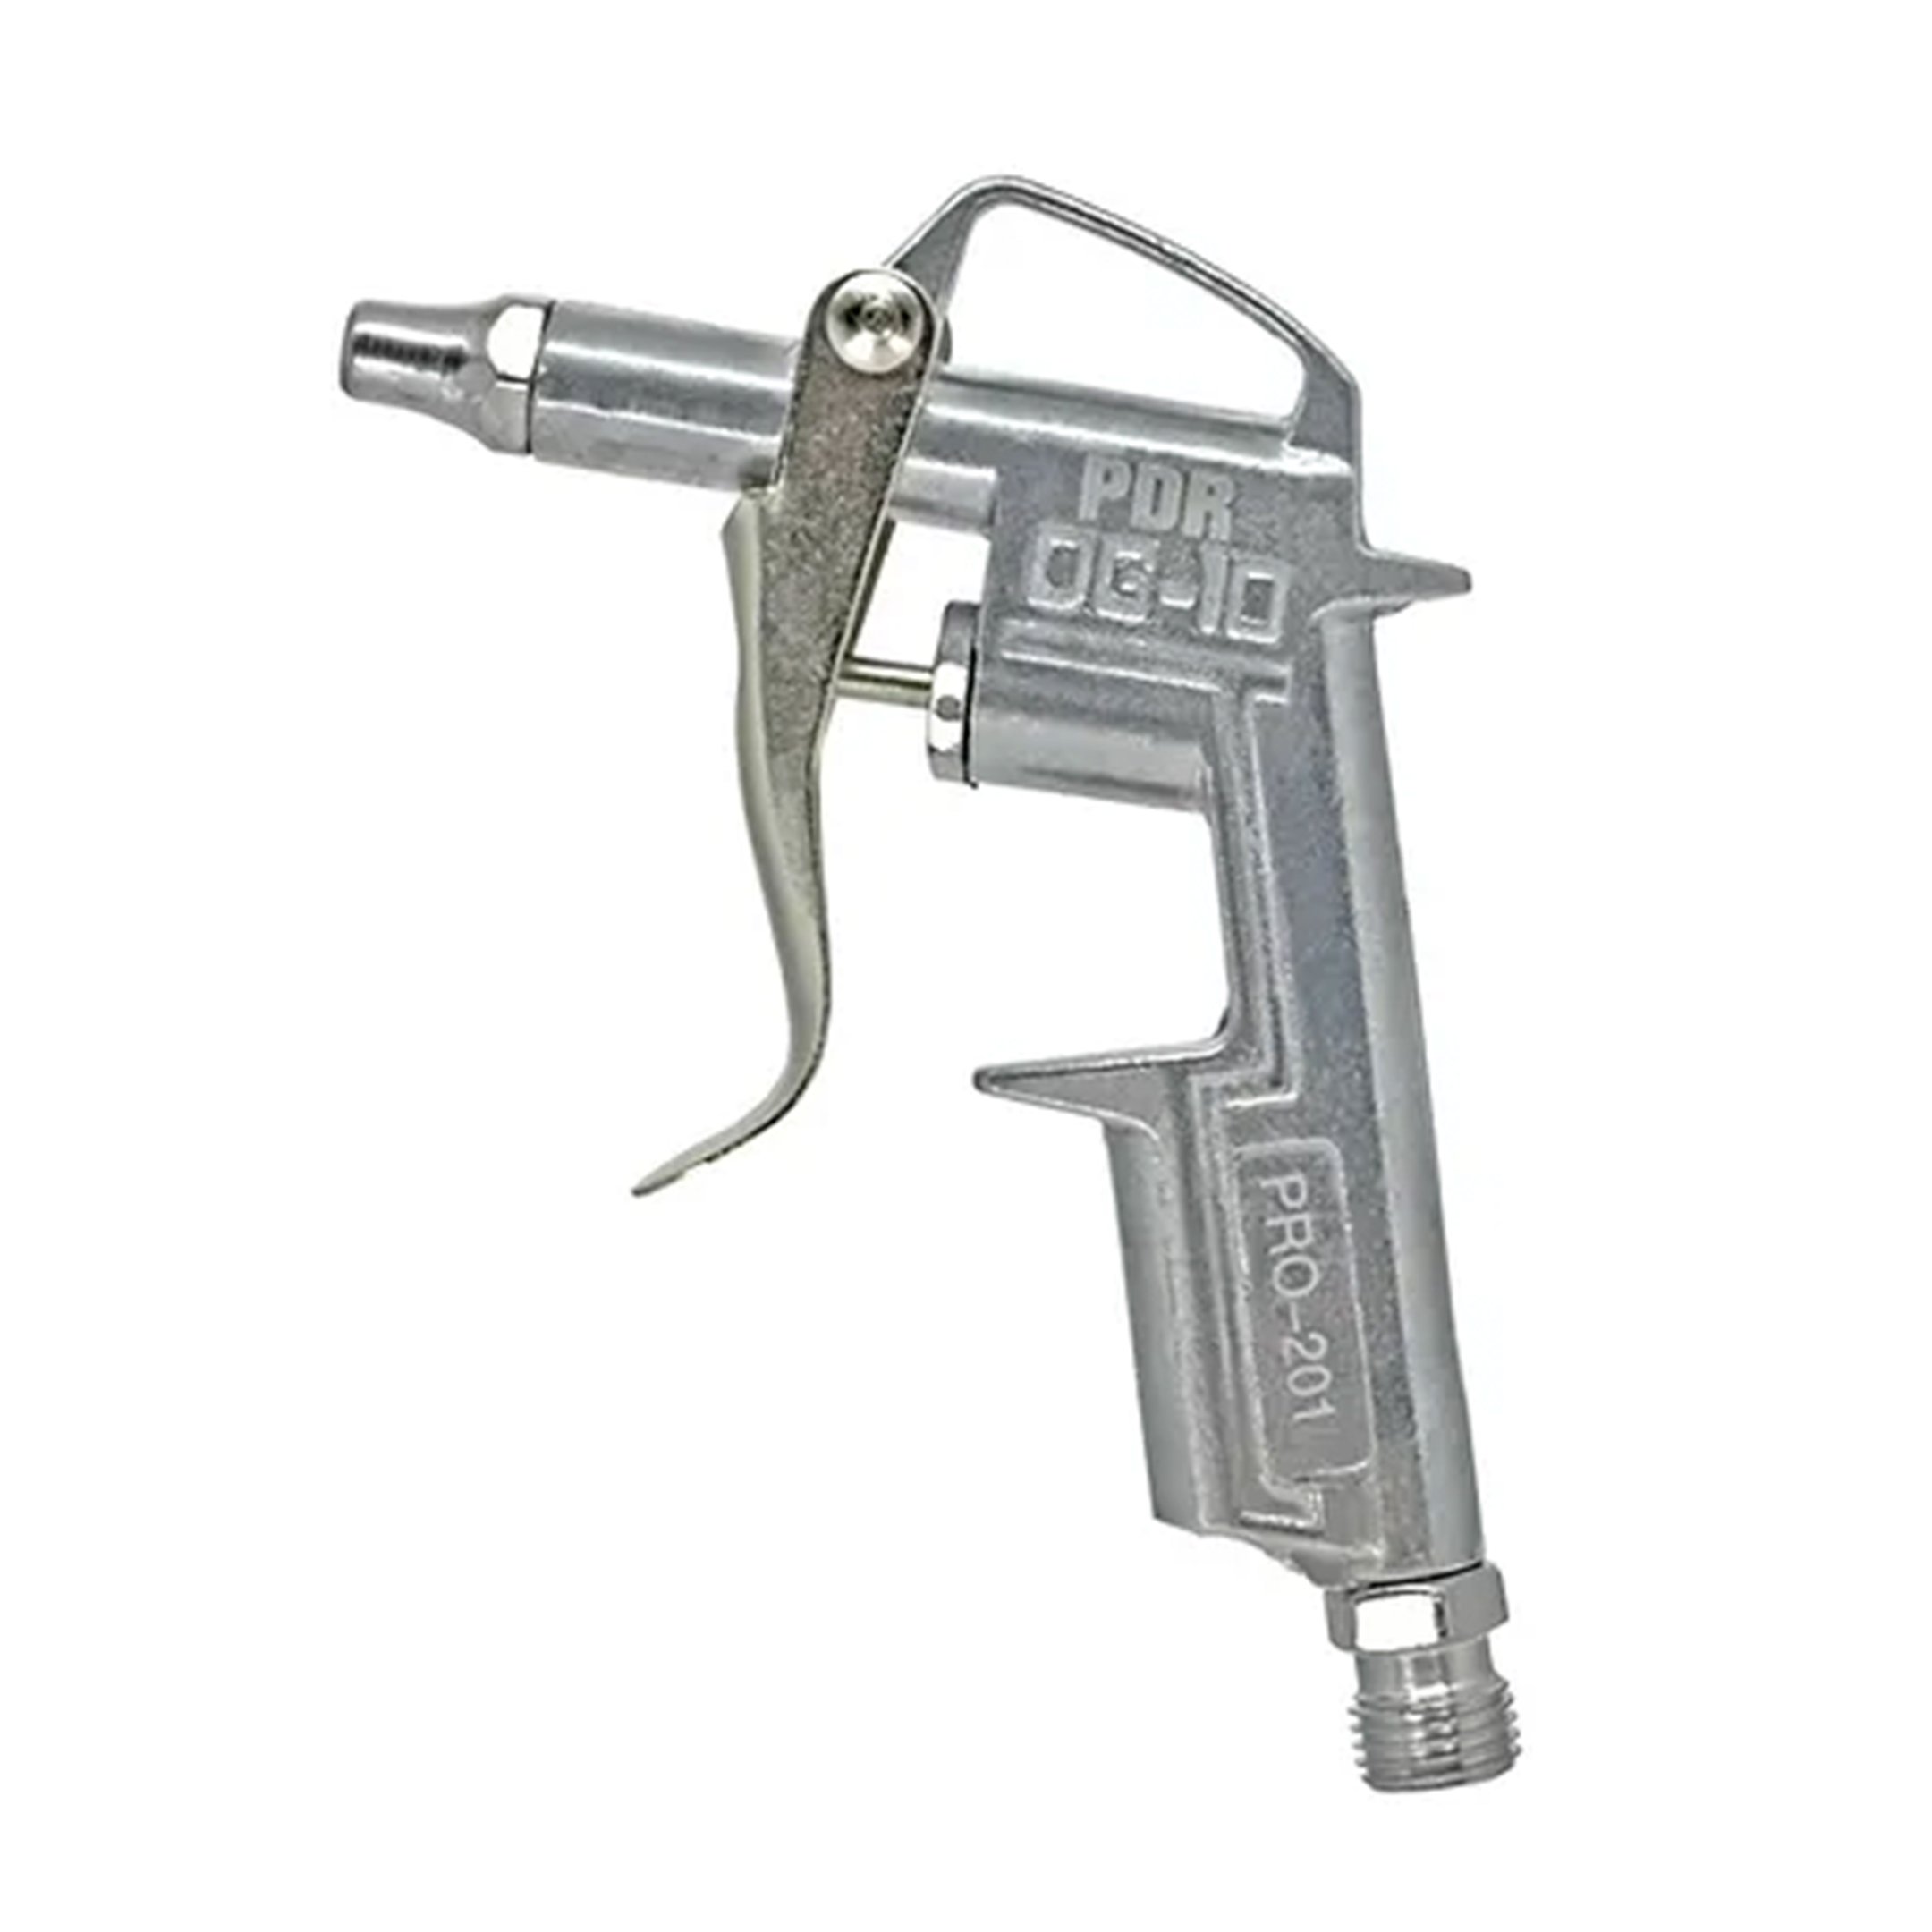 Kit Pistola de Pintura HVLP 600ml com 3 Jogos de Reparo e Bicos - 1.4, 1.7  e 2.0mm, Manômetro - FORTGPRO-FG8640, Loja do Mecânico